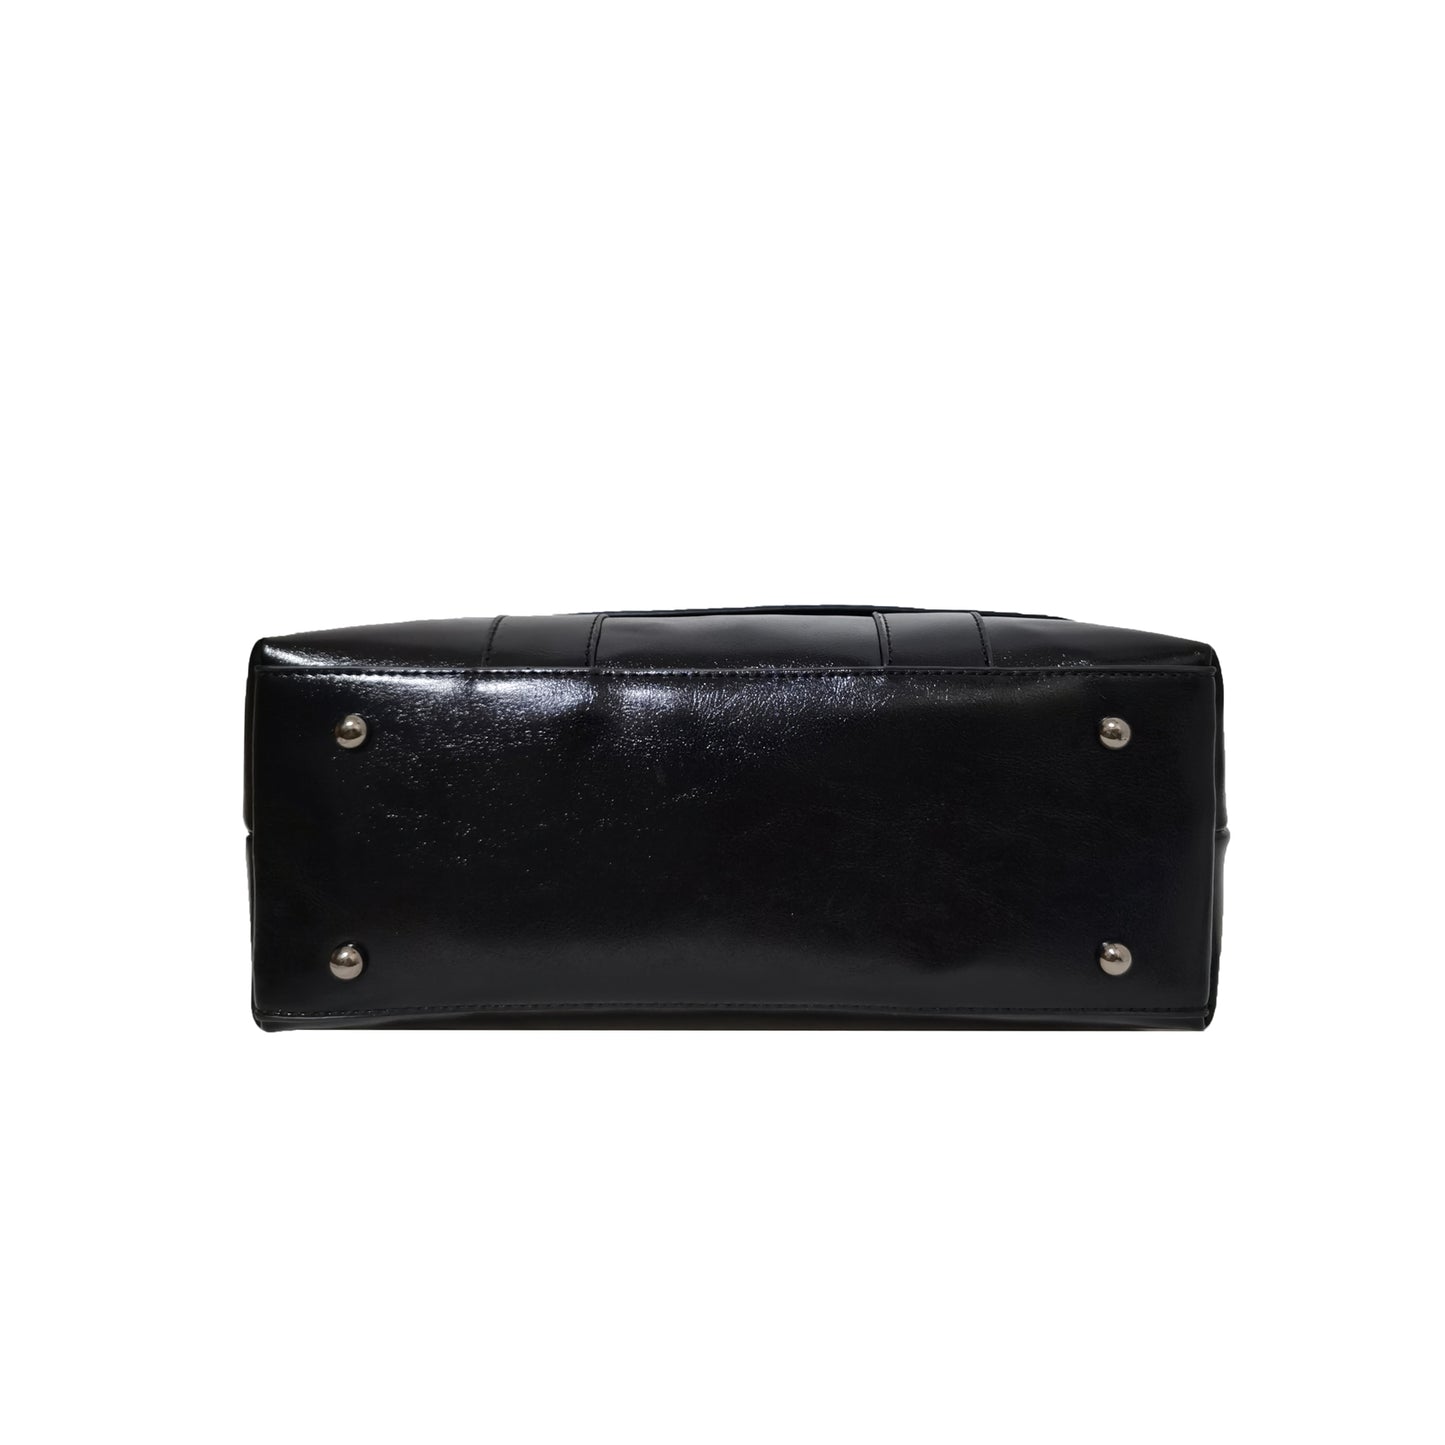 Women's genuine cowhide leather Handbag Perry design in crocodile print by Tomorrow Closet